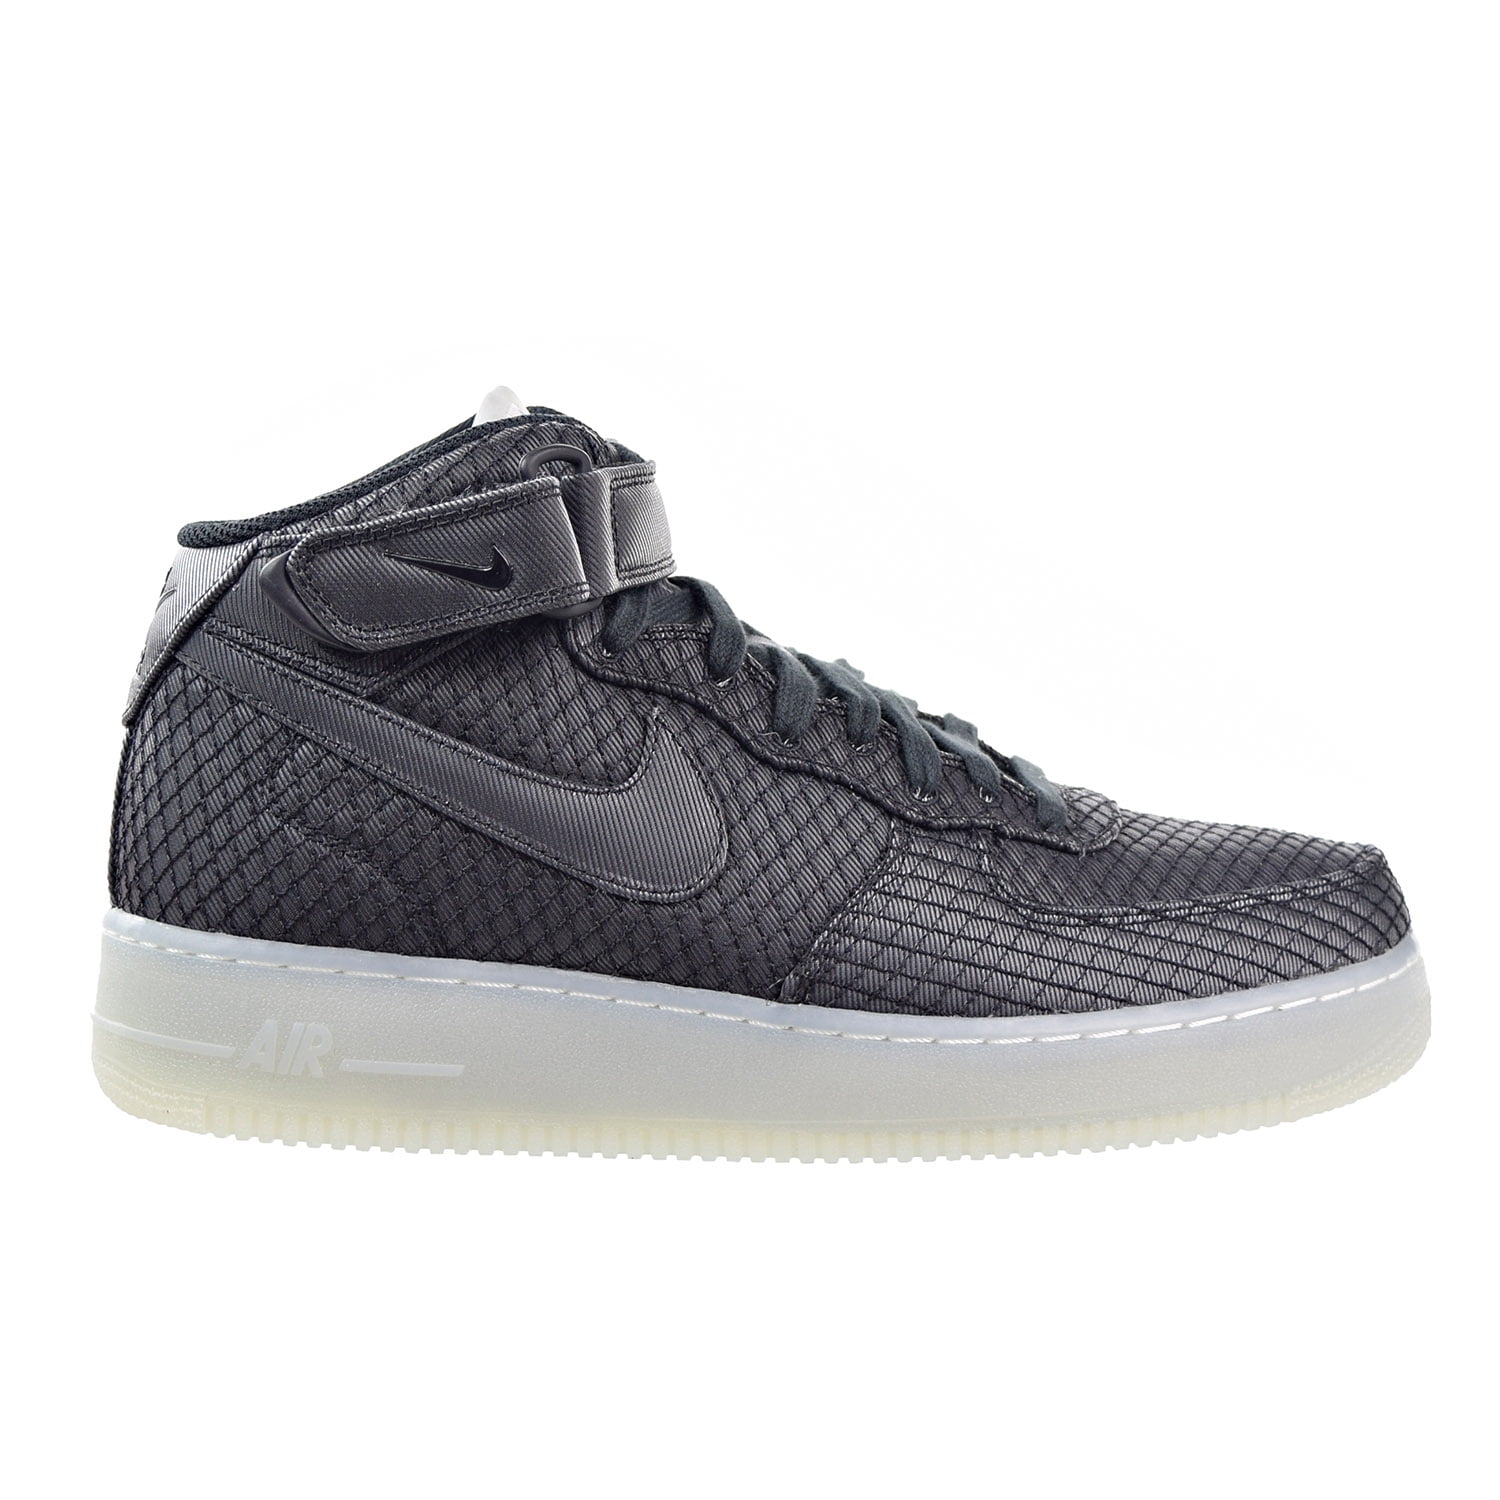 Nike Air Force 1 07 Mid LV8 Men's Shoe Black/White/Metallic Silver  804609-005